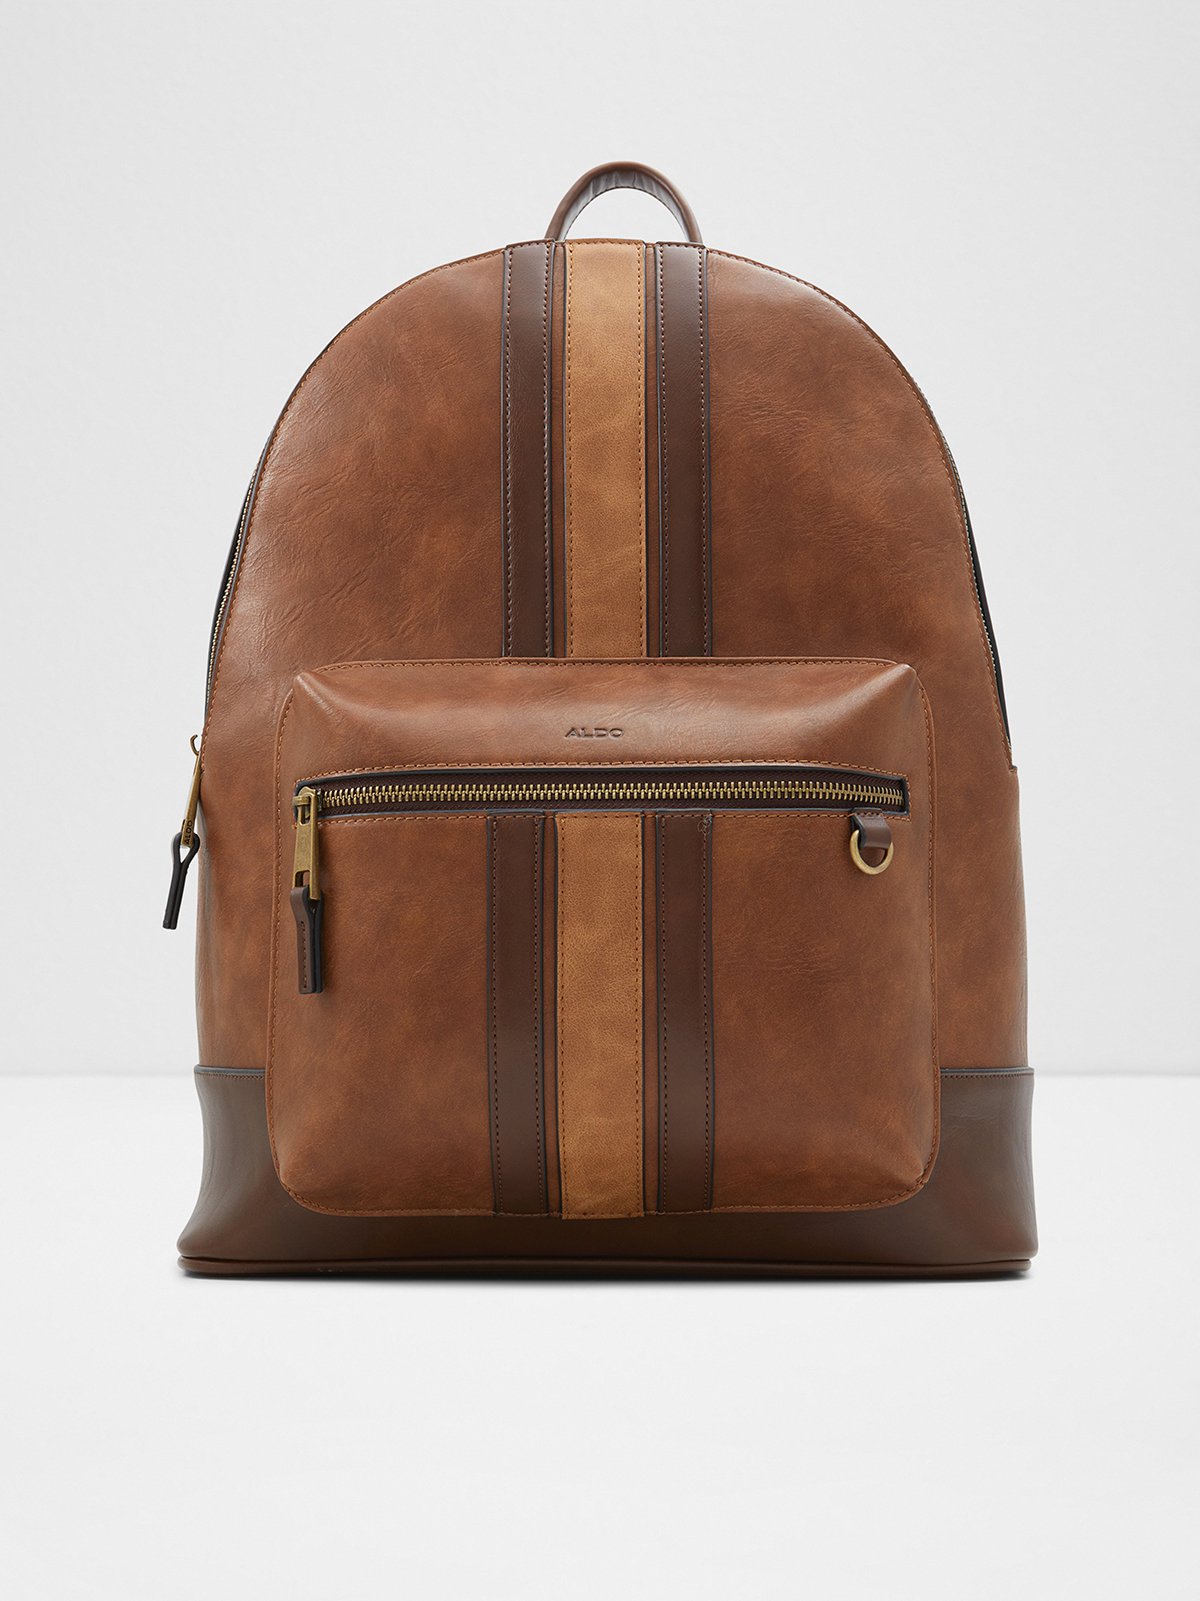 Aldo Snakeskin backpack | Black backpack purse, Burgundy backpacks, Aldo  backpack